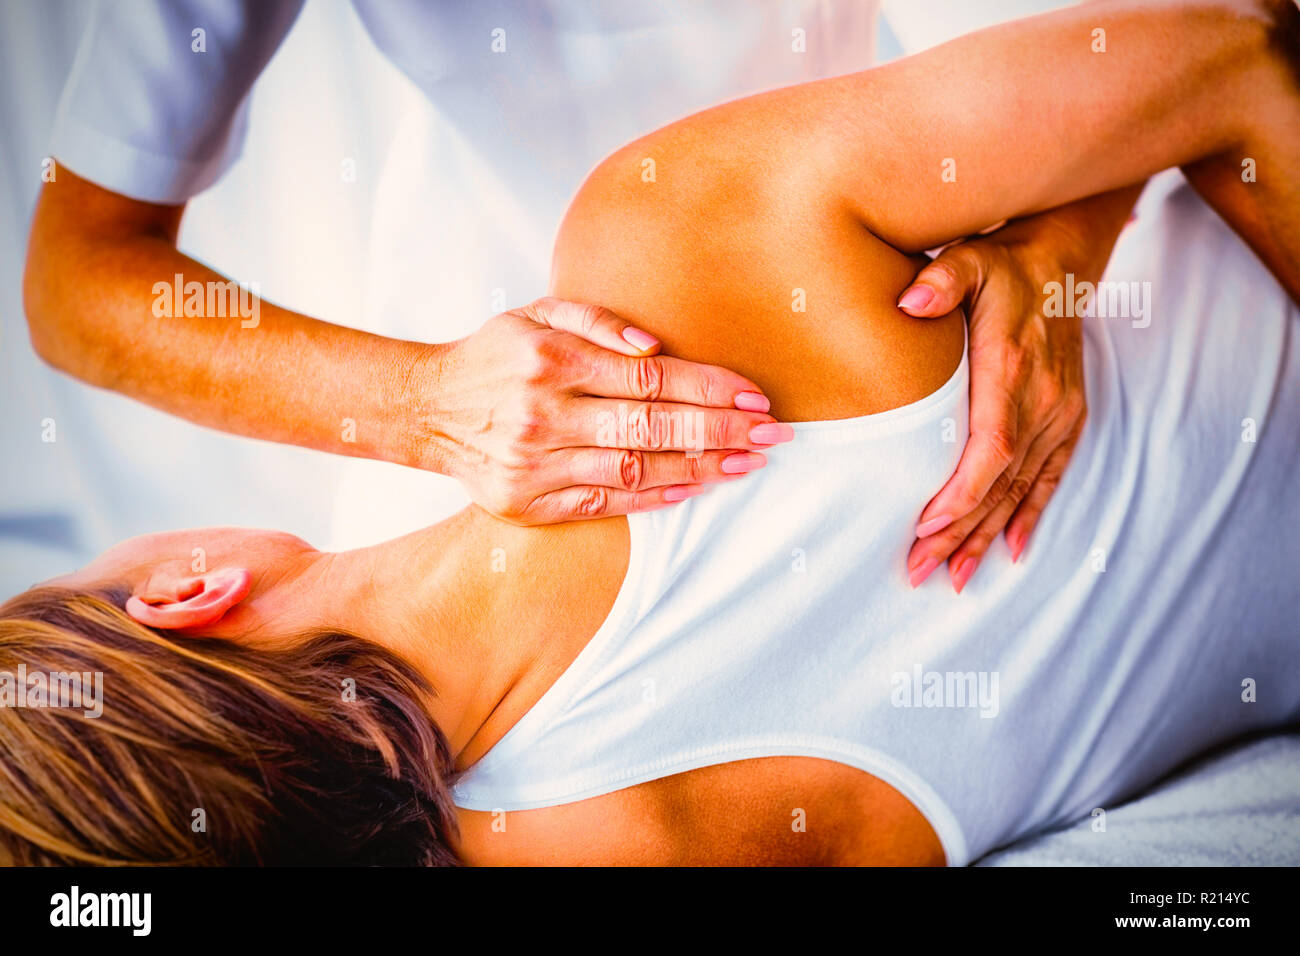 Cropped image of human hand massaging female shoulder Stock Photo